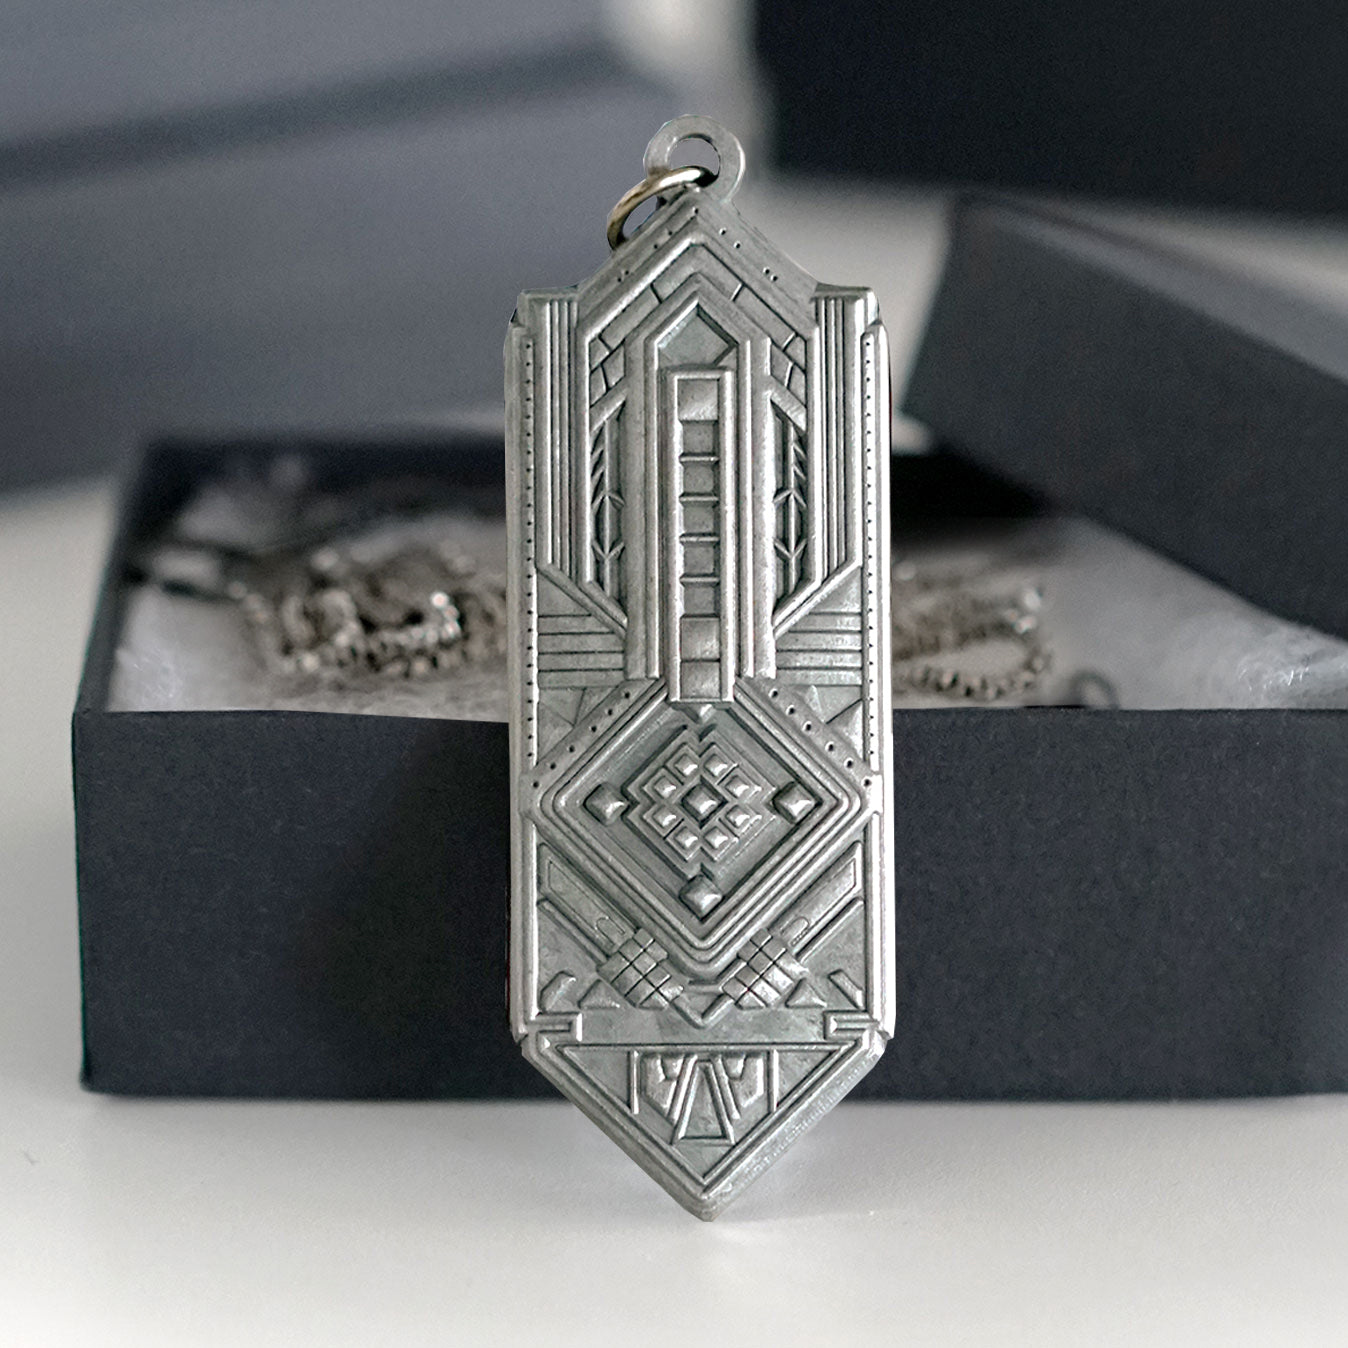 Ambrosia Antique Silver Pendant by Threyda